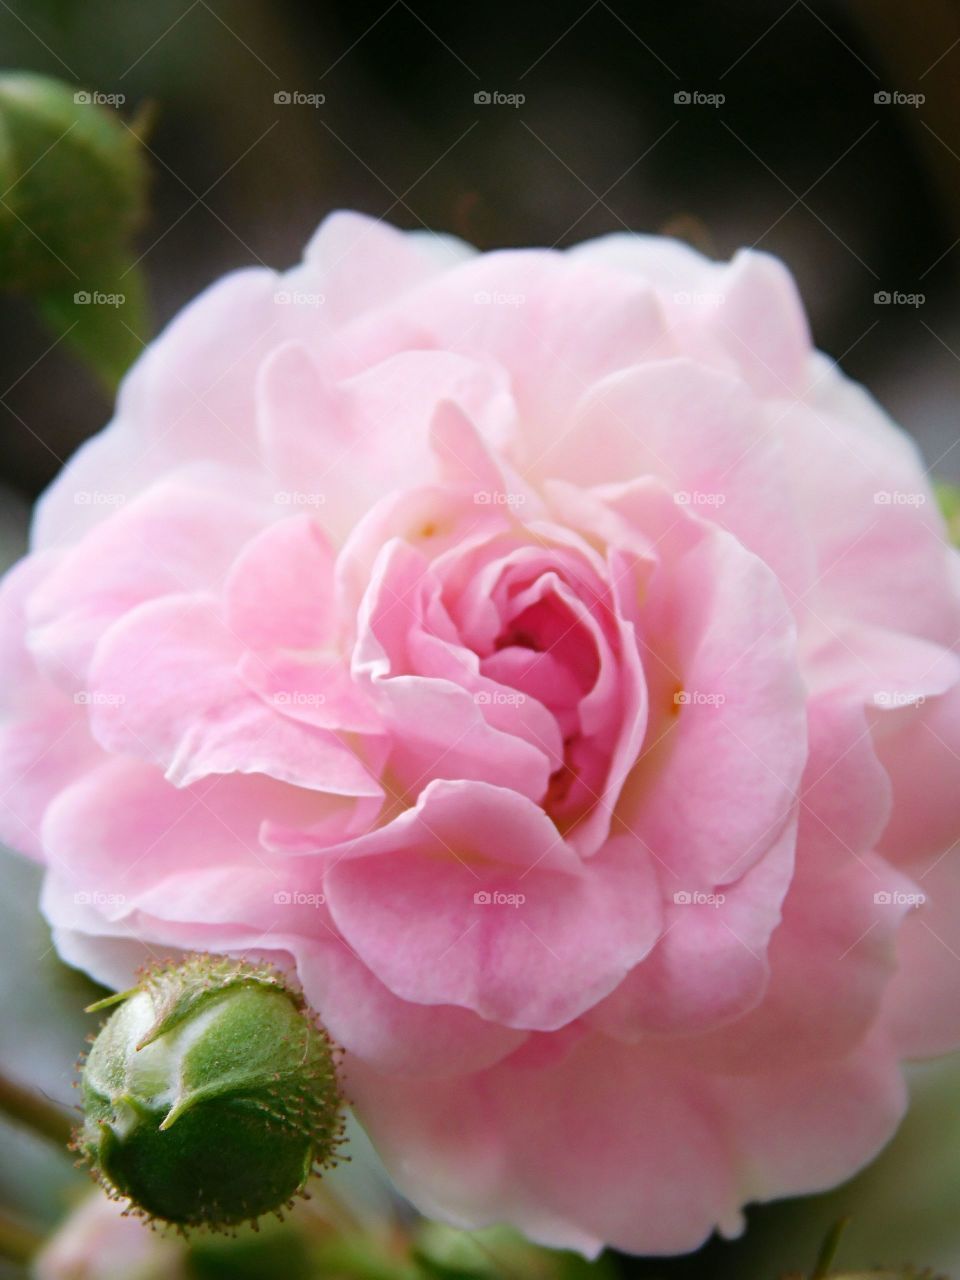 The beautiful rose